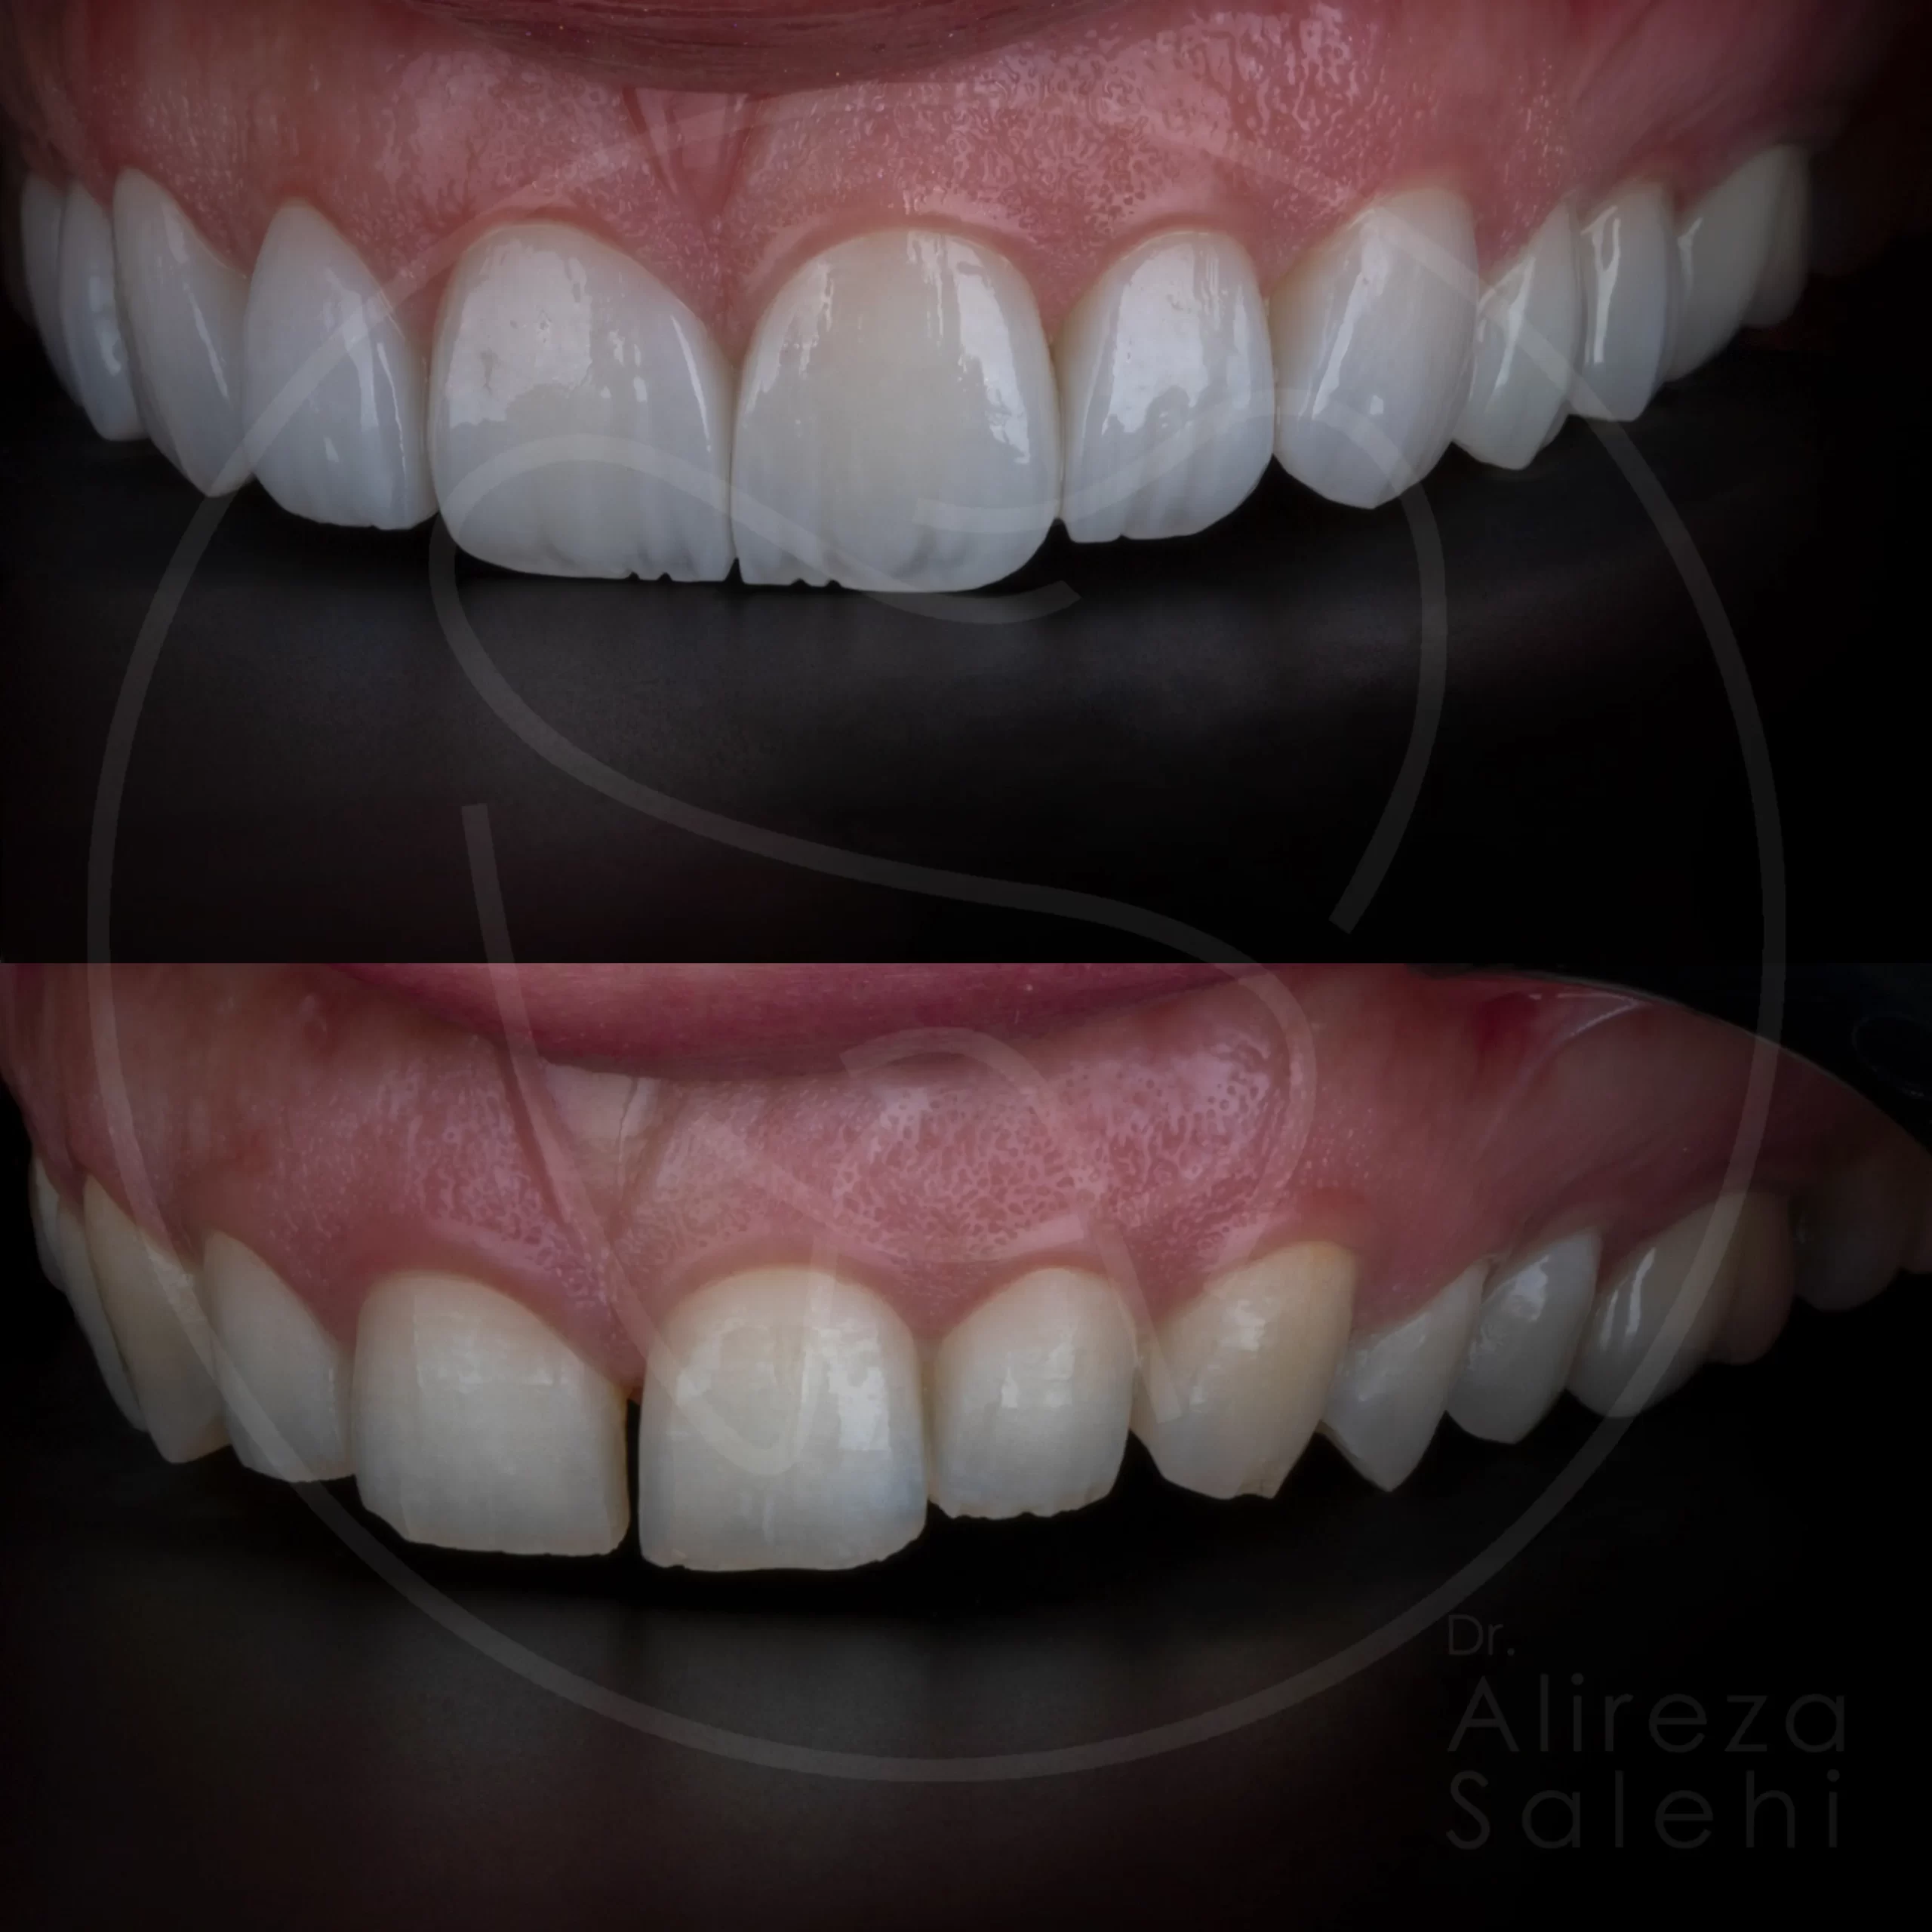 لمینت دندان در کلینیک دندانپزشکی دکتر علیرضا صالحی 29